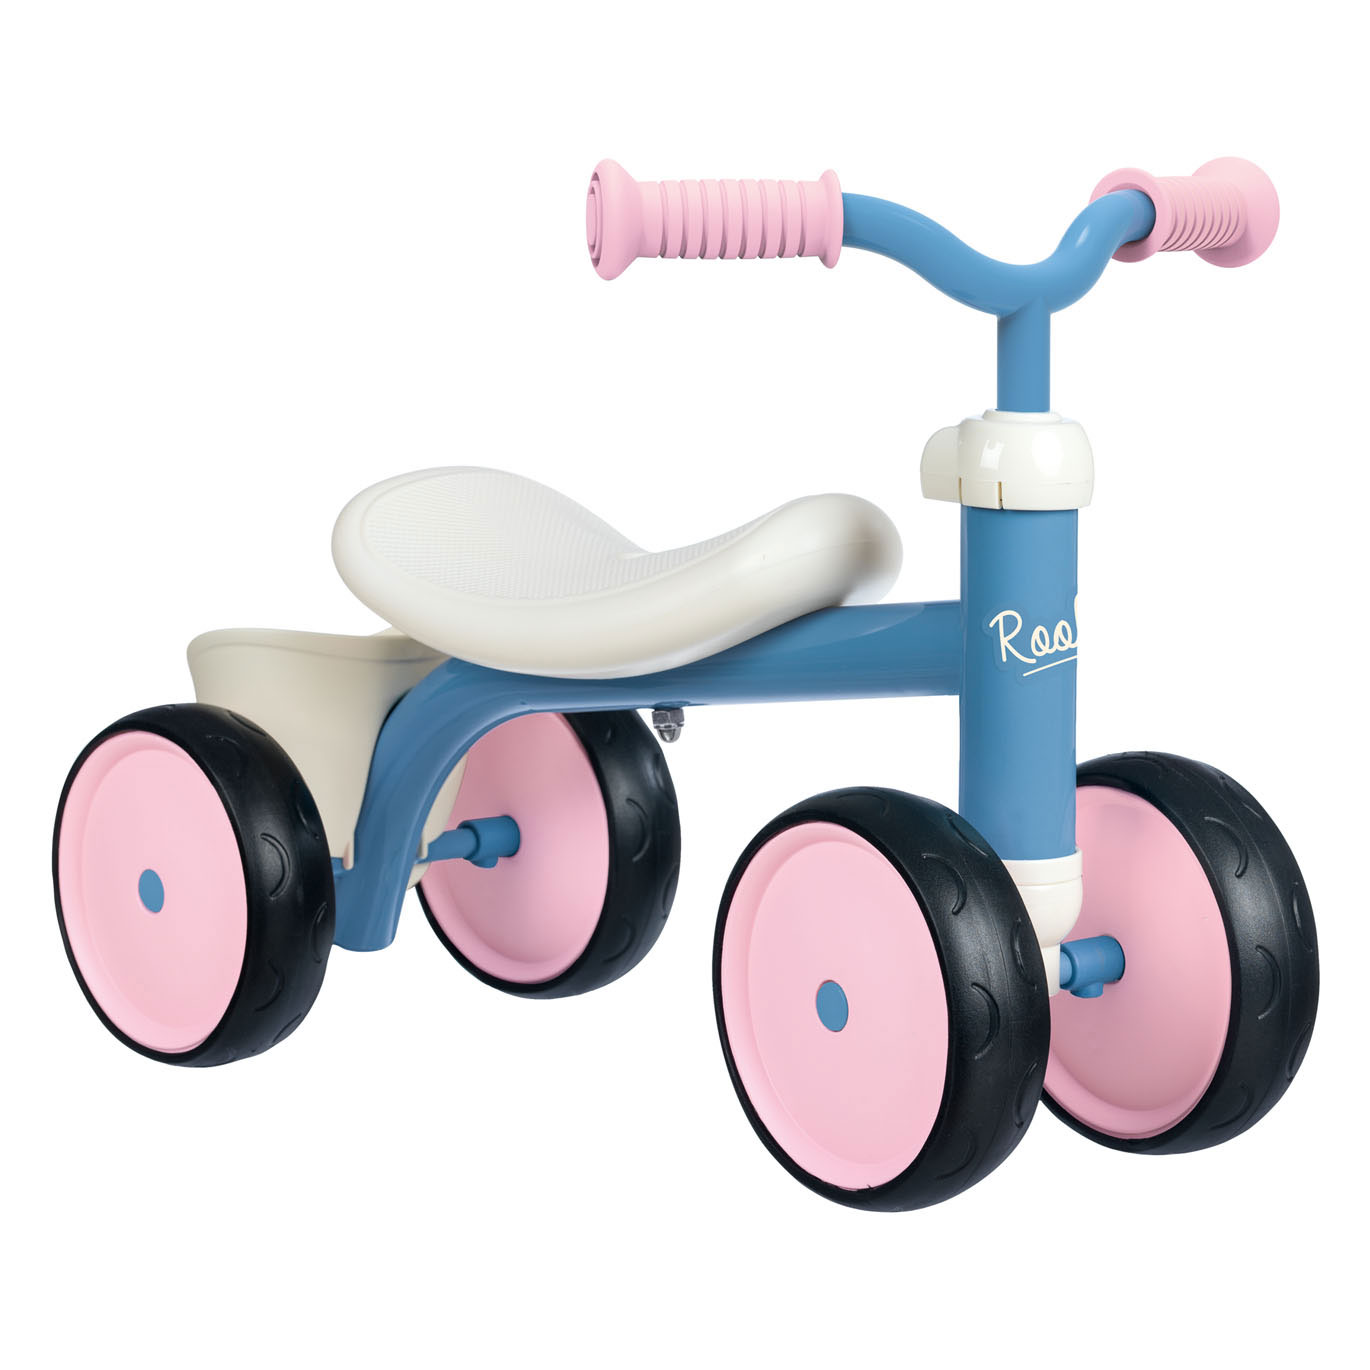 Ga terug Pardon tank Smoby Rookie Ride-On Ride-on Car Pink | Thimble Toys